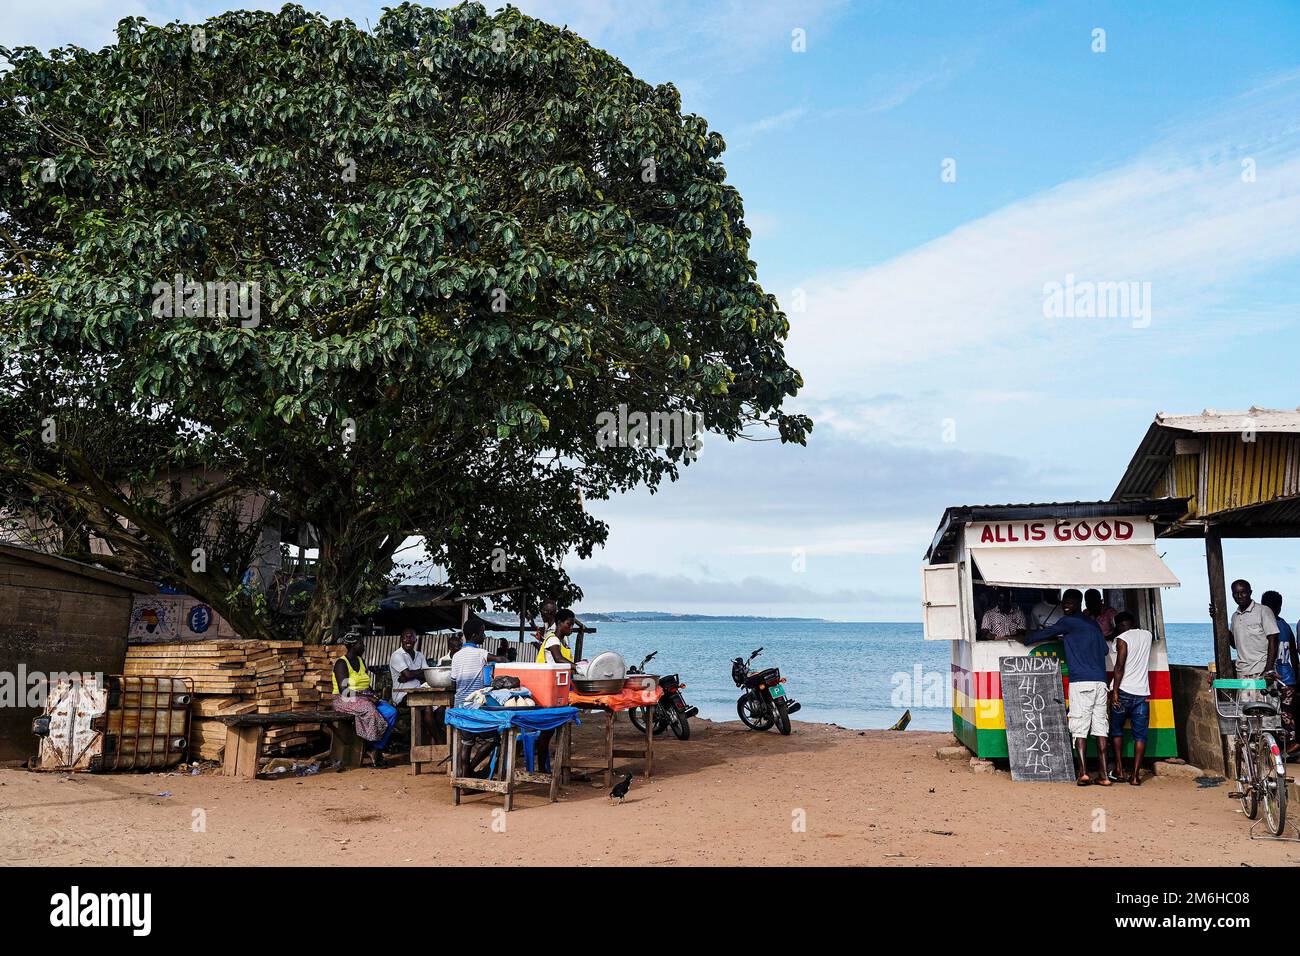 Mangobaum, Menschen, Dorfleben, Strand, Lotterie, Elmina, Golf von Guinea, Ghana Stockfoto